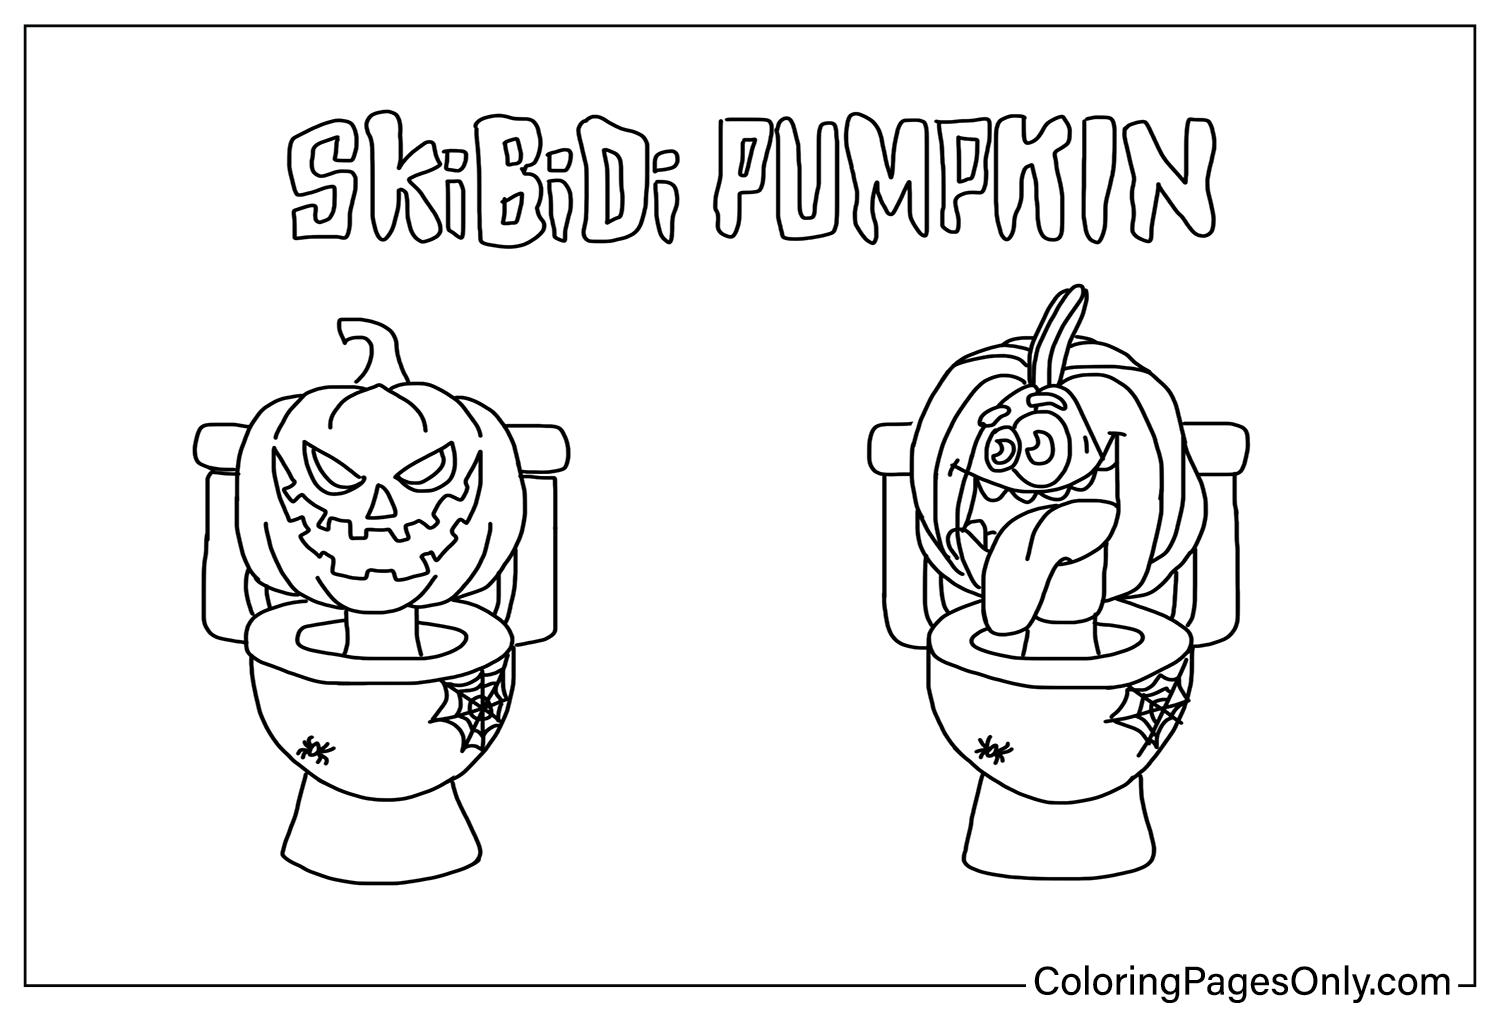 Coloring Pages Skibidi Pumpkin from Skibidi Toilet